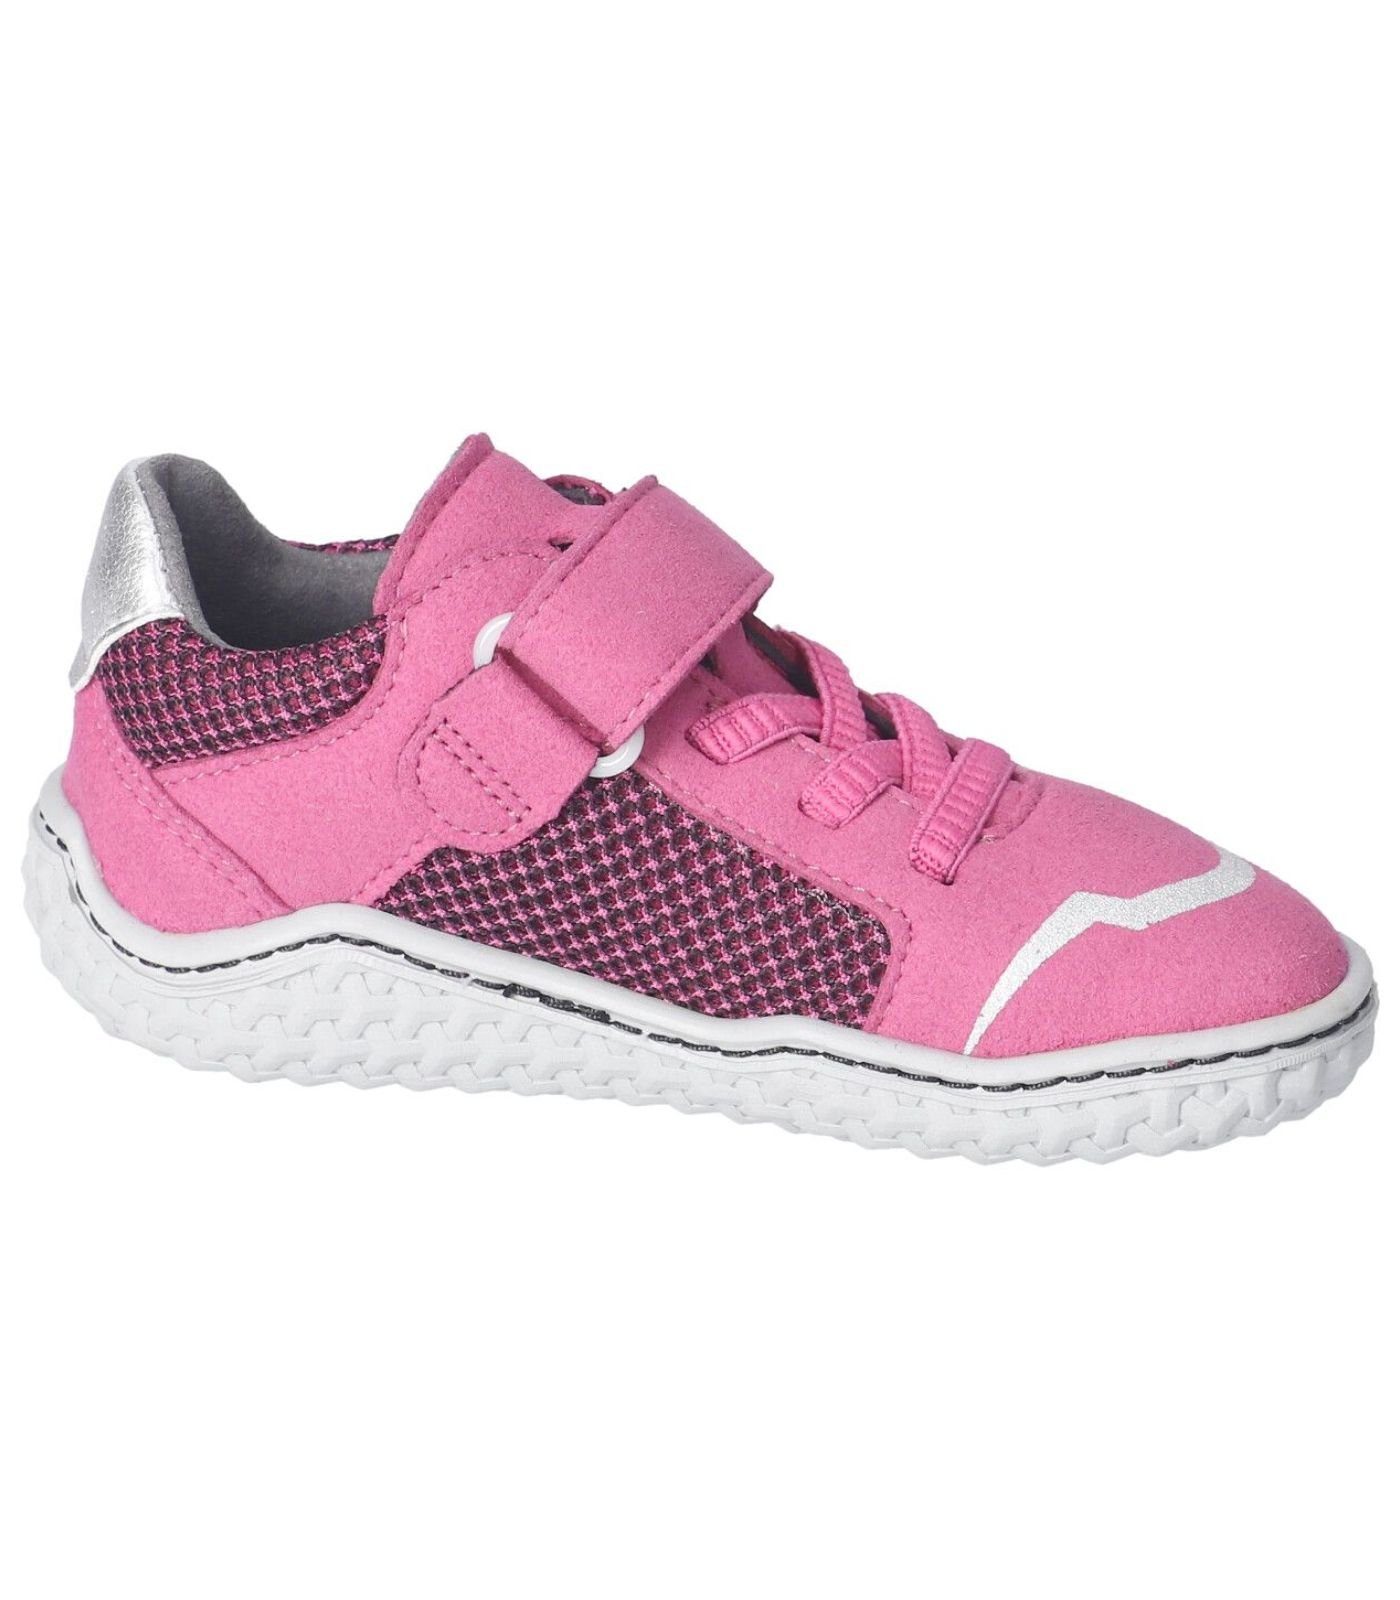 Ricosta Sneaker Lederimitat/Textil Sneaker Pink